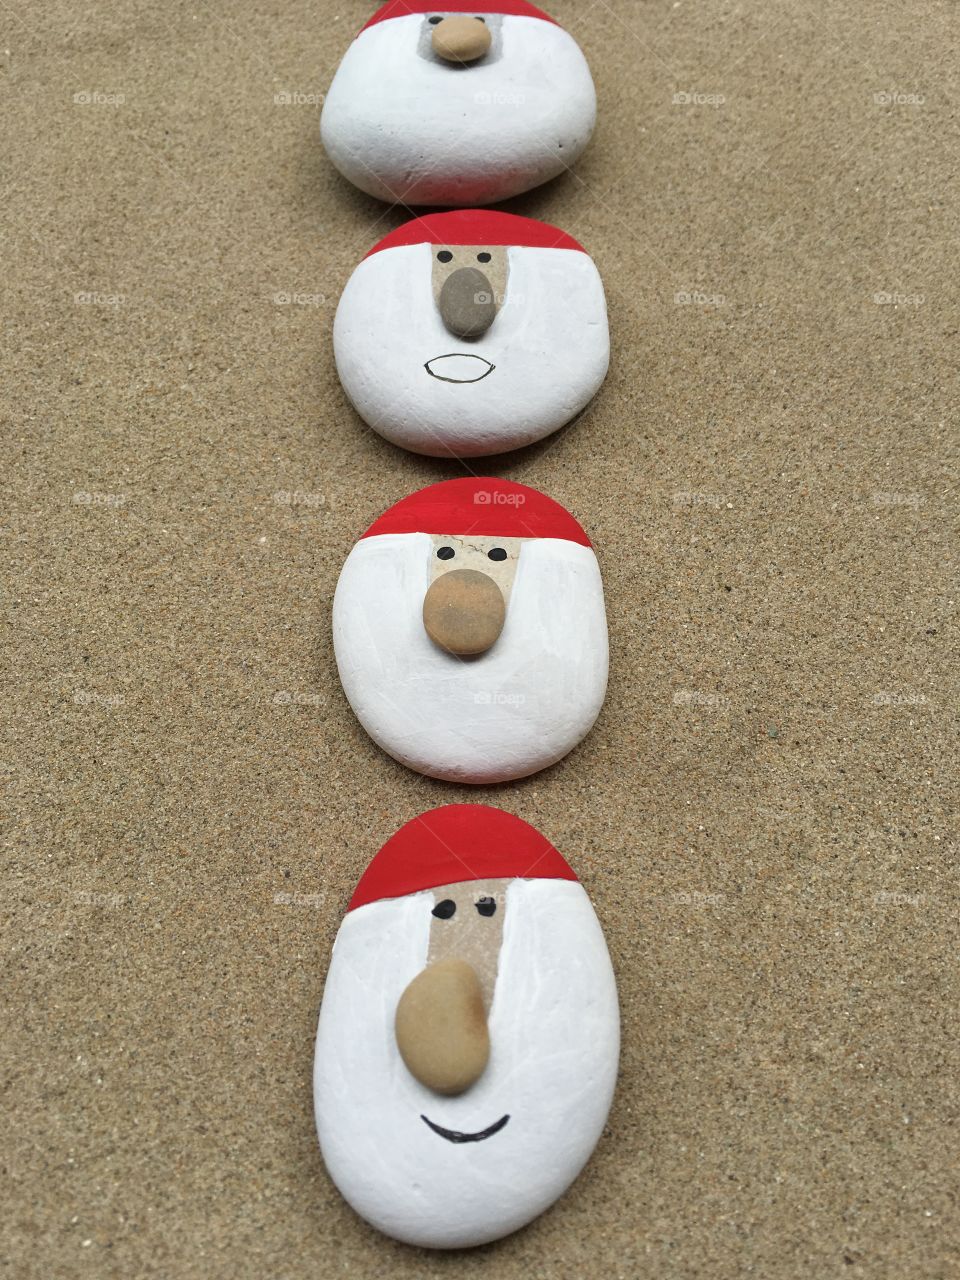 Souvenir of Christmas with many Santa Claus heads design